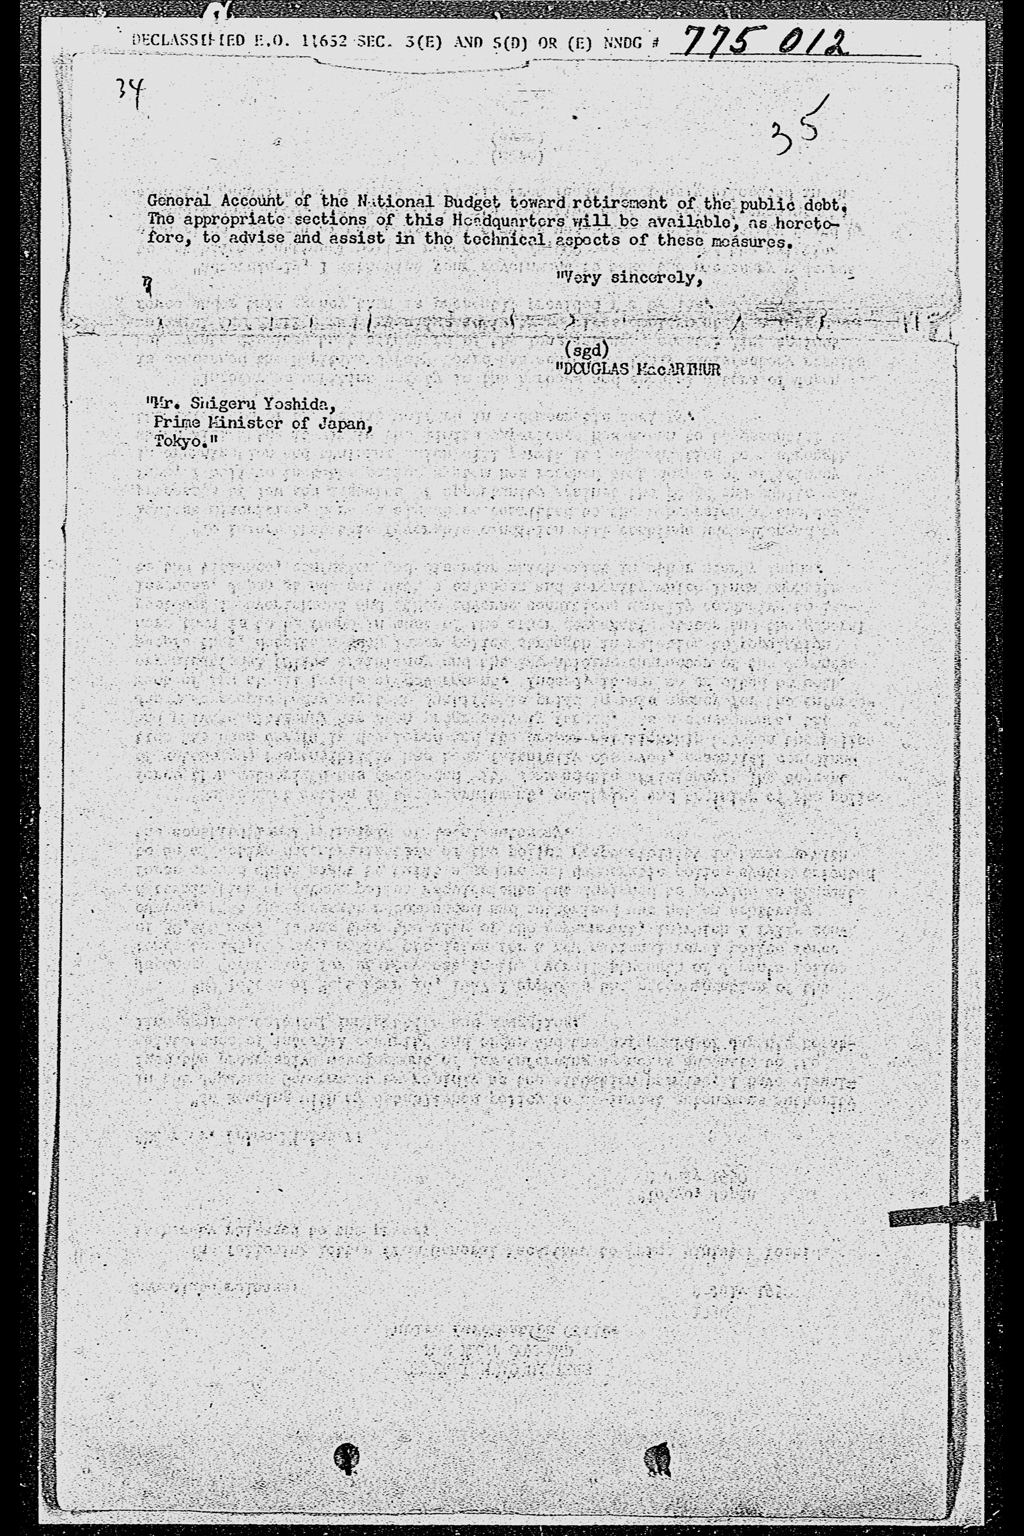 [Douglas MacArthur's Letter to Prime Minister] (拡大画像)